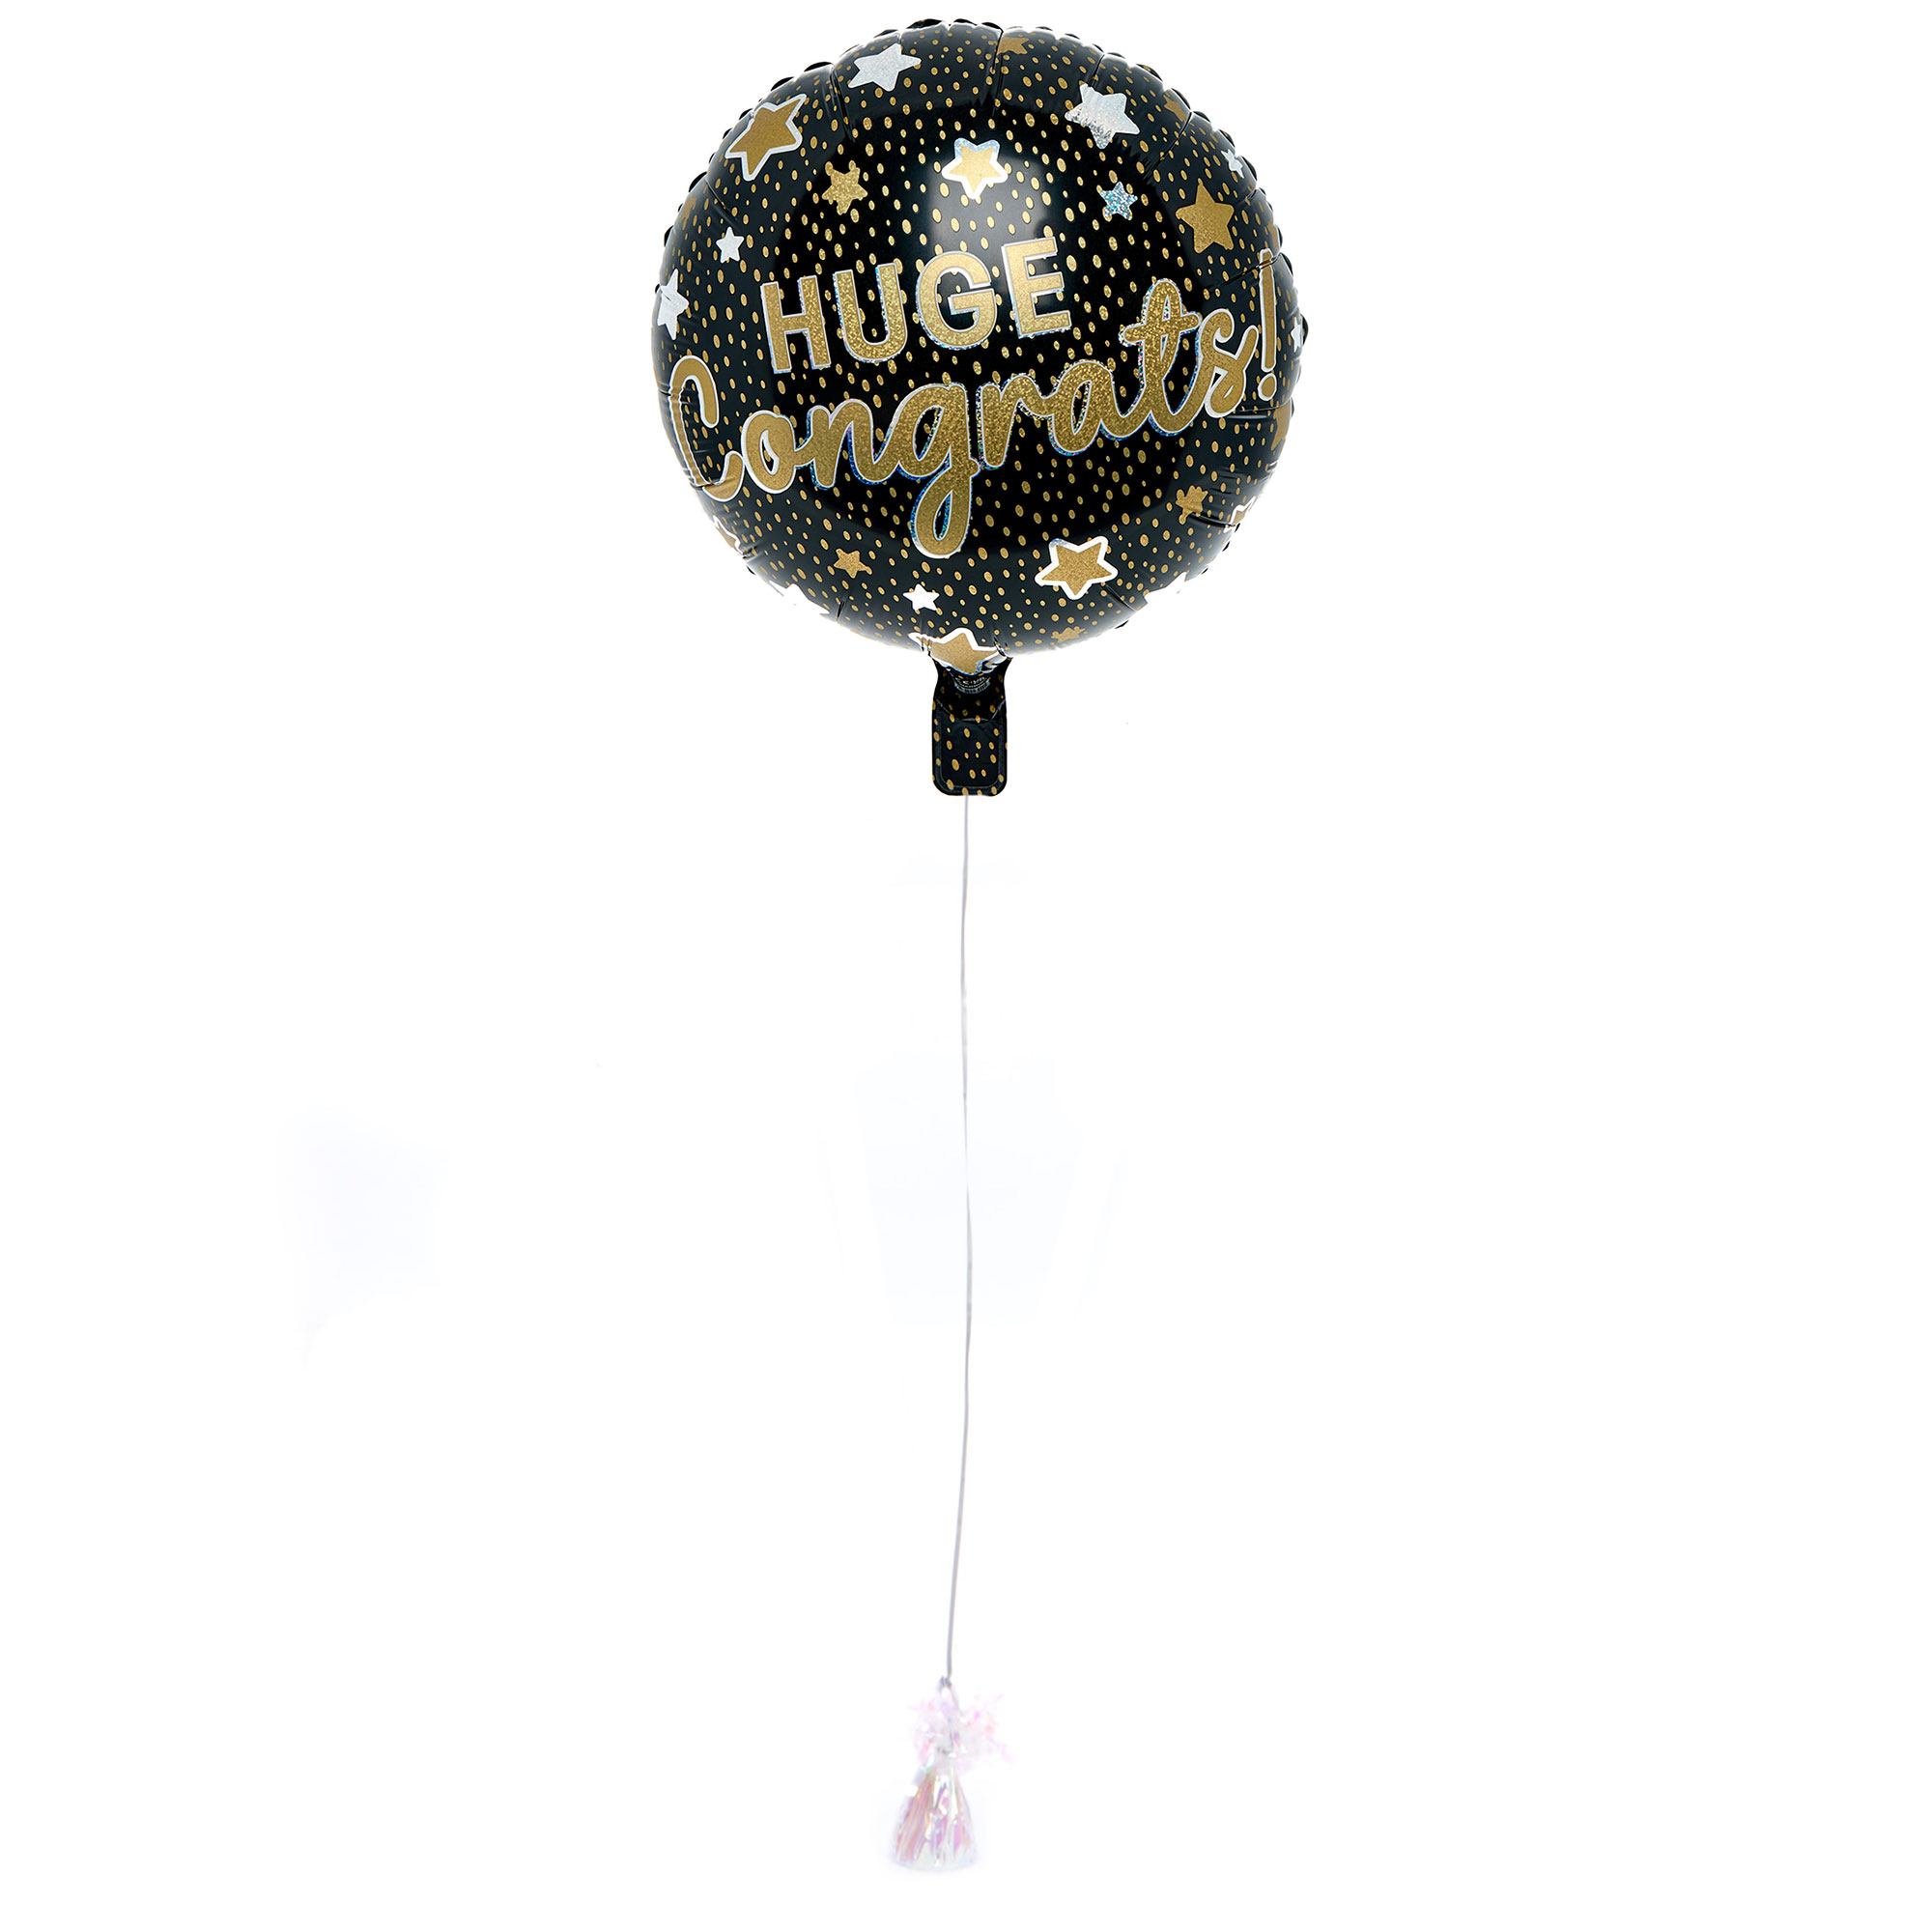 Huge Congrats Balloon & Lindt Chocolate Box - FREE GIFT CARD!